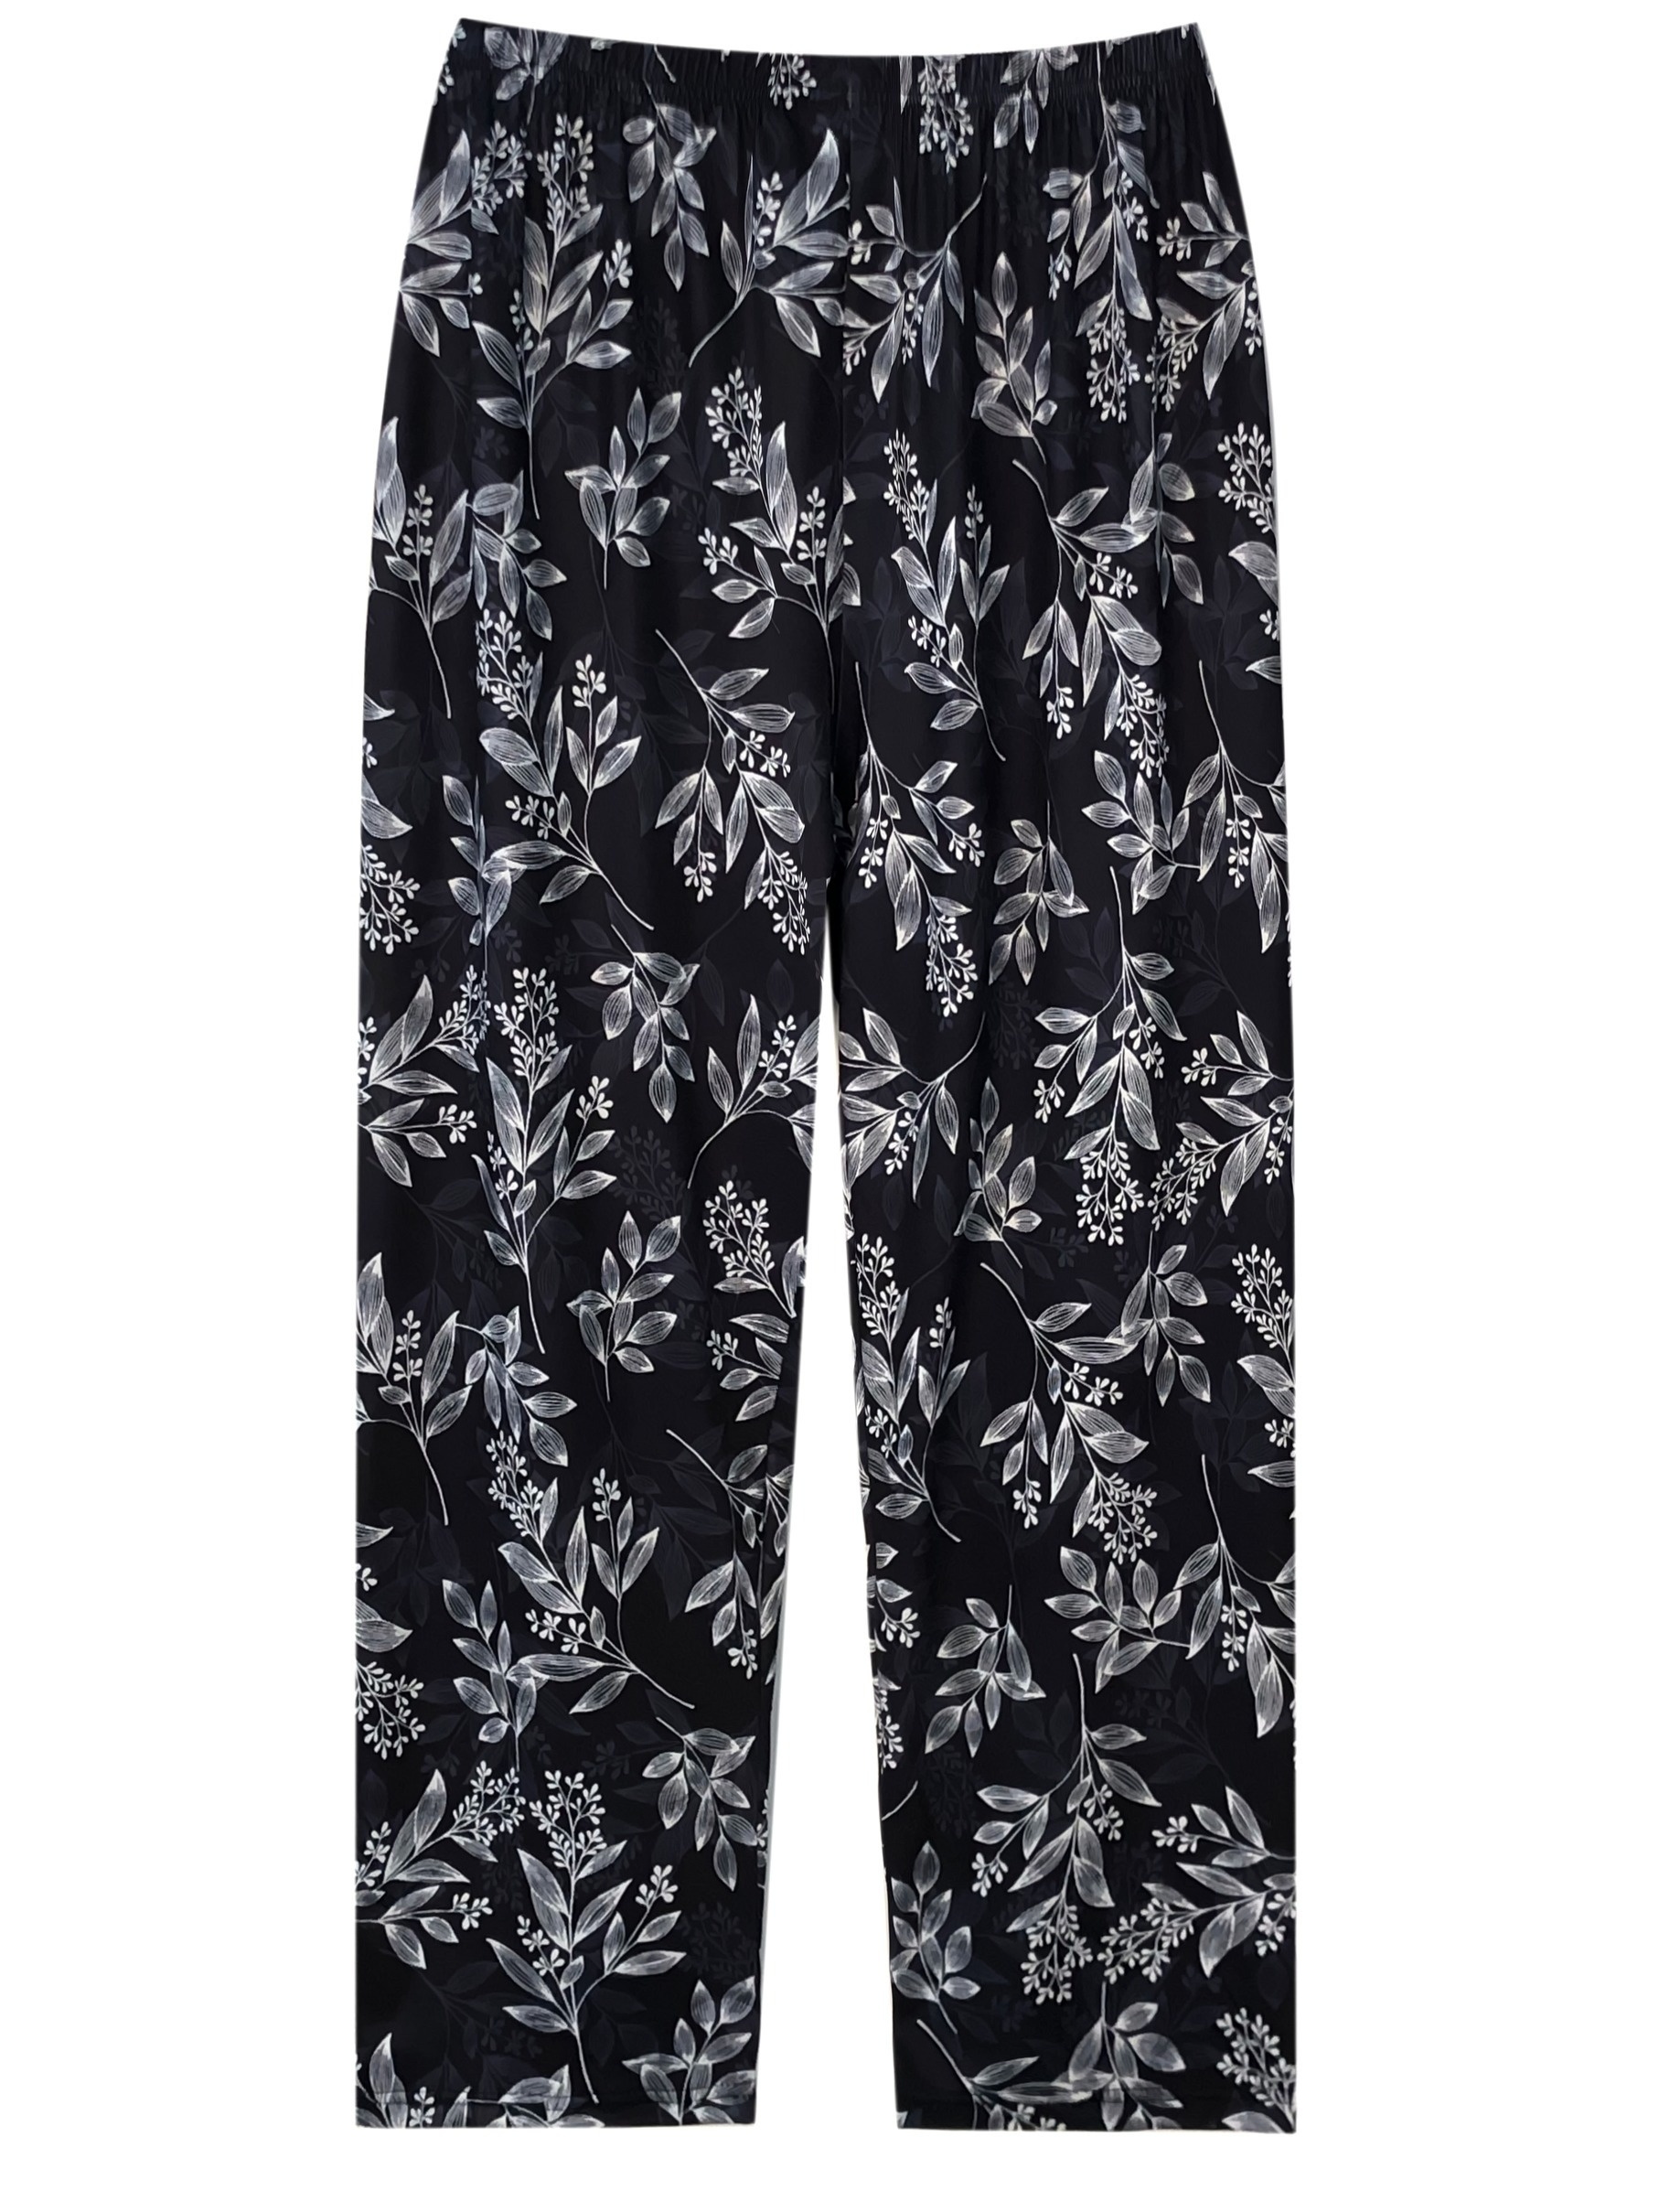 Women's Plus Size Pajama Lounge Pants Elastic Waist Gray Floral